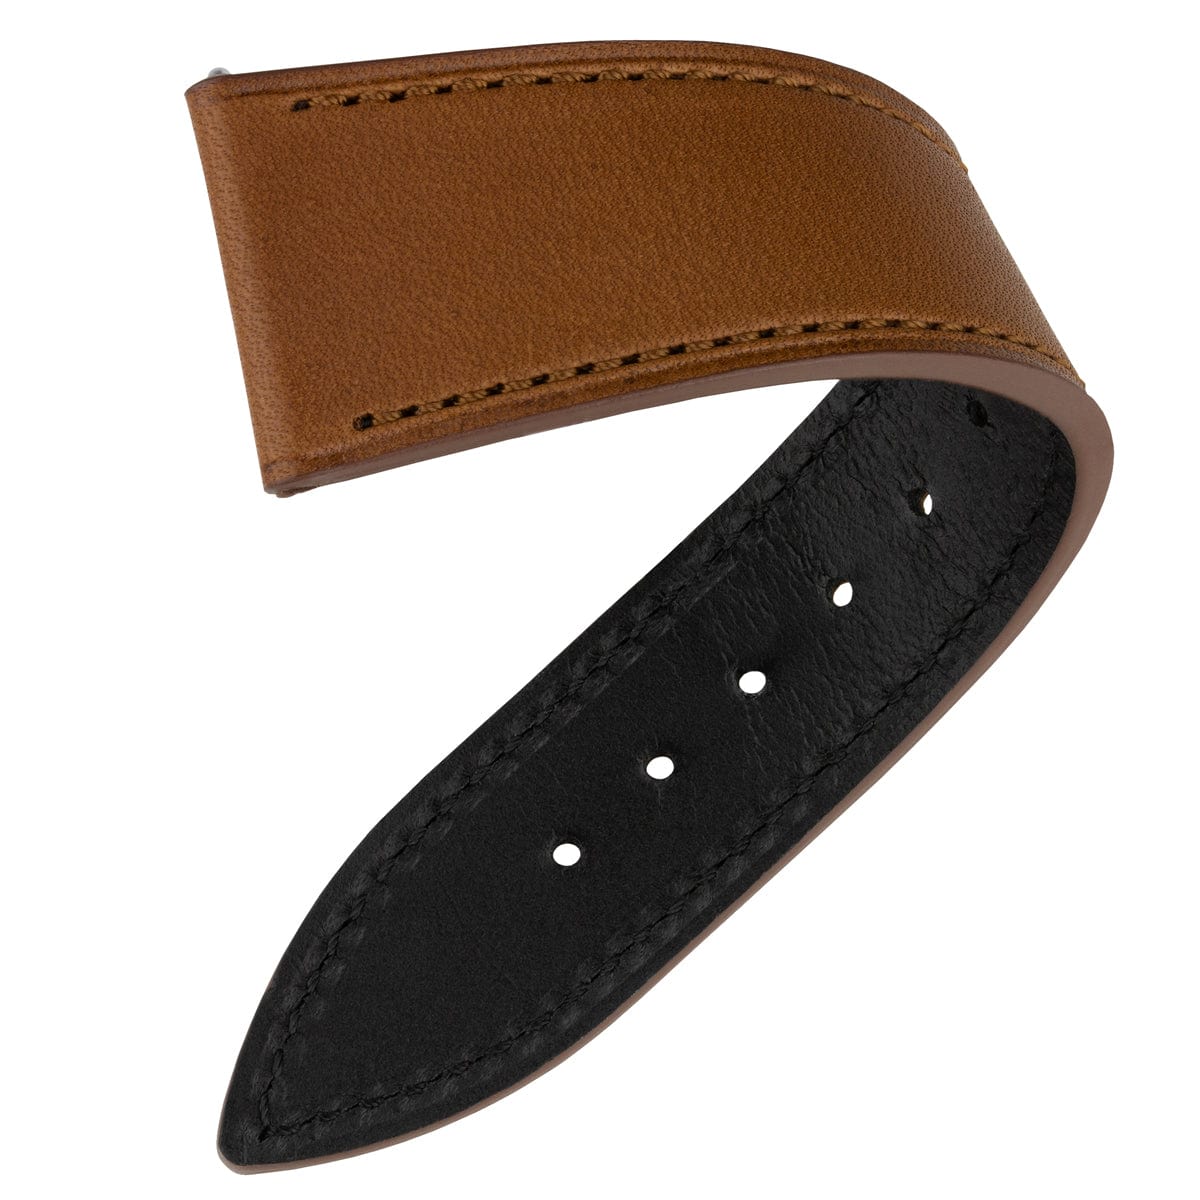 Beswick Novonappa Leather Watch Strap - Light Brown